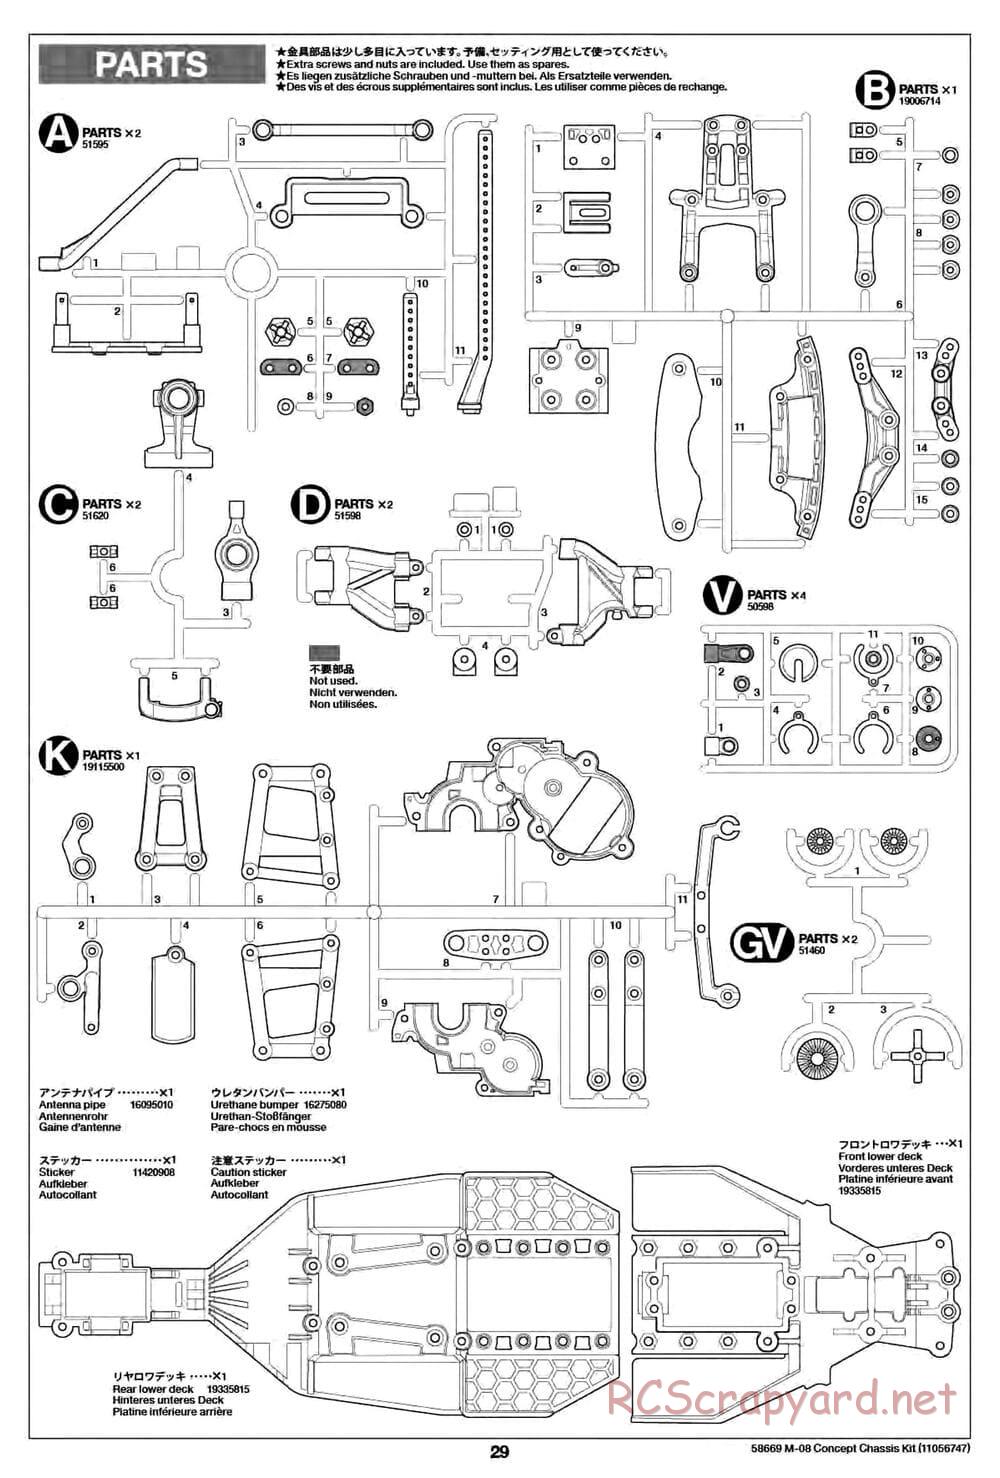 Tamiya - M-08 Concept Chassis - Manual - Page 29